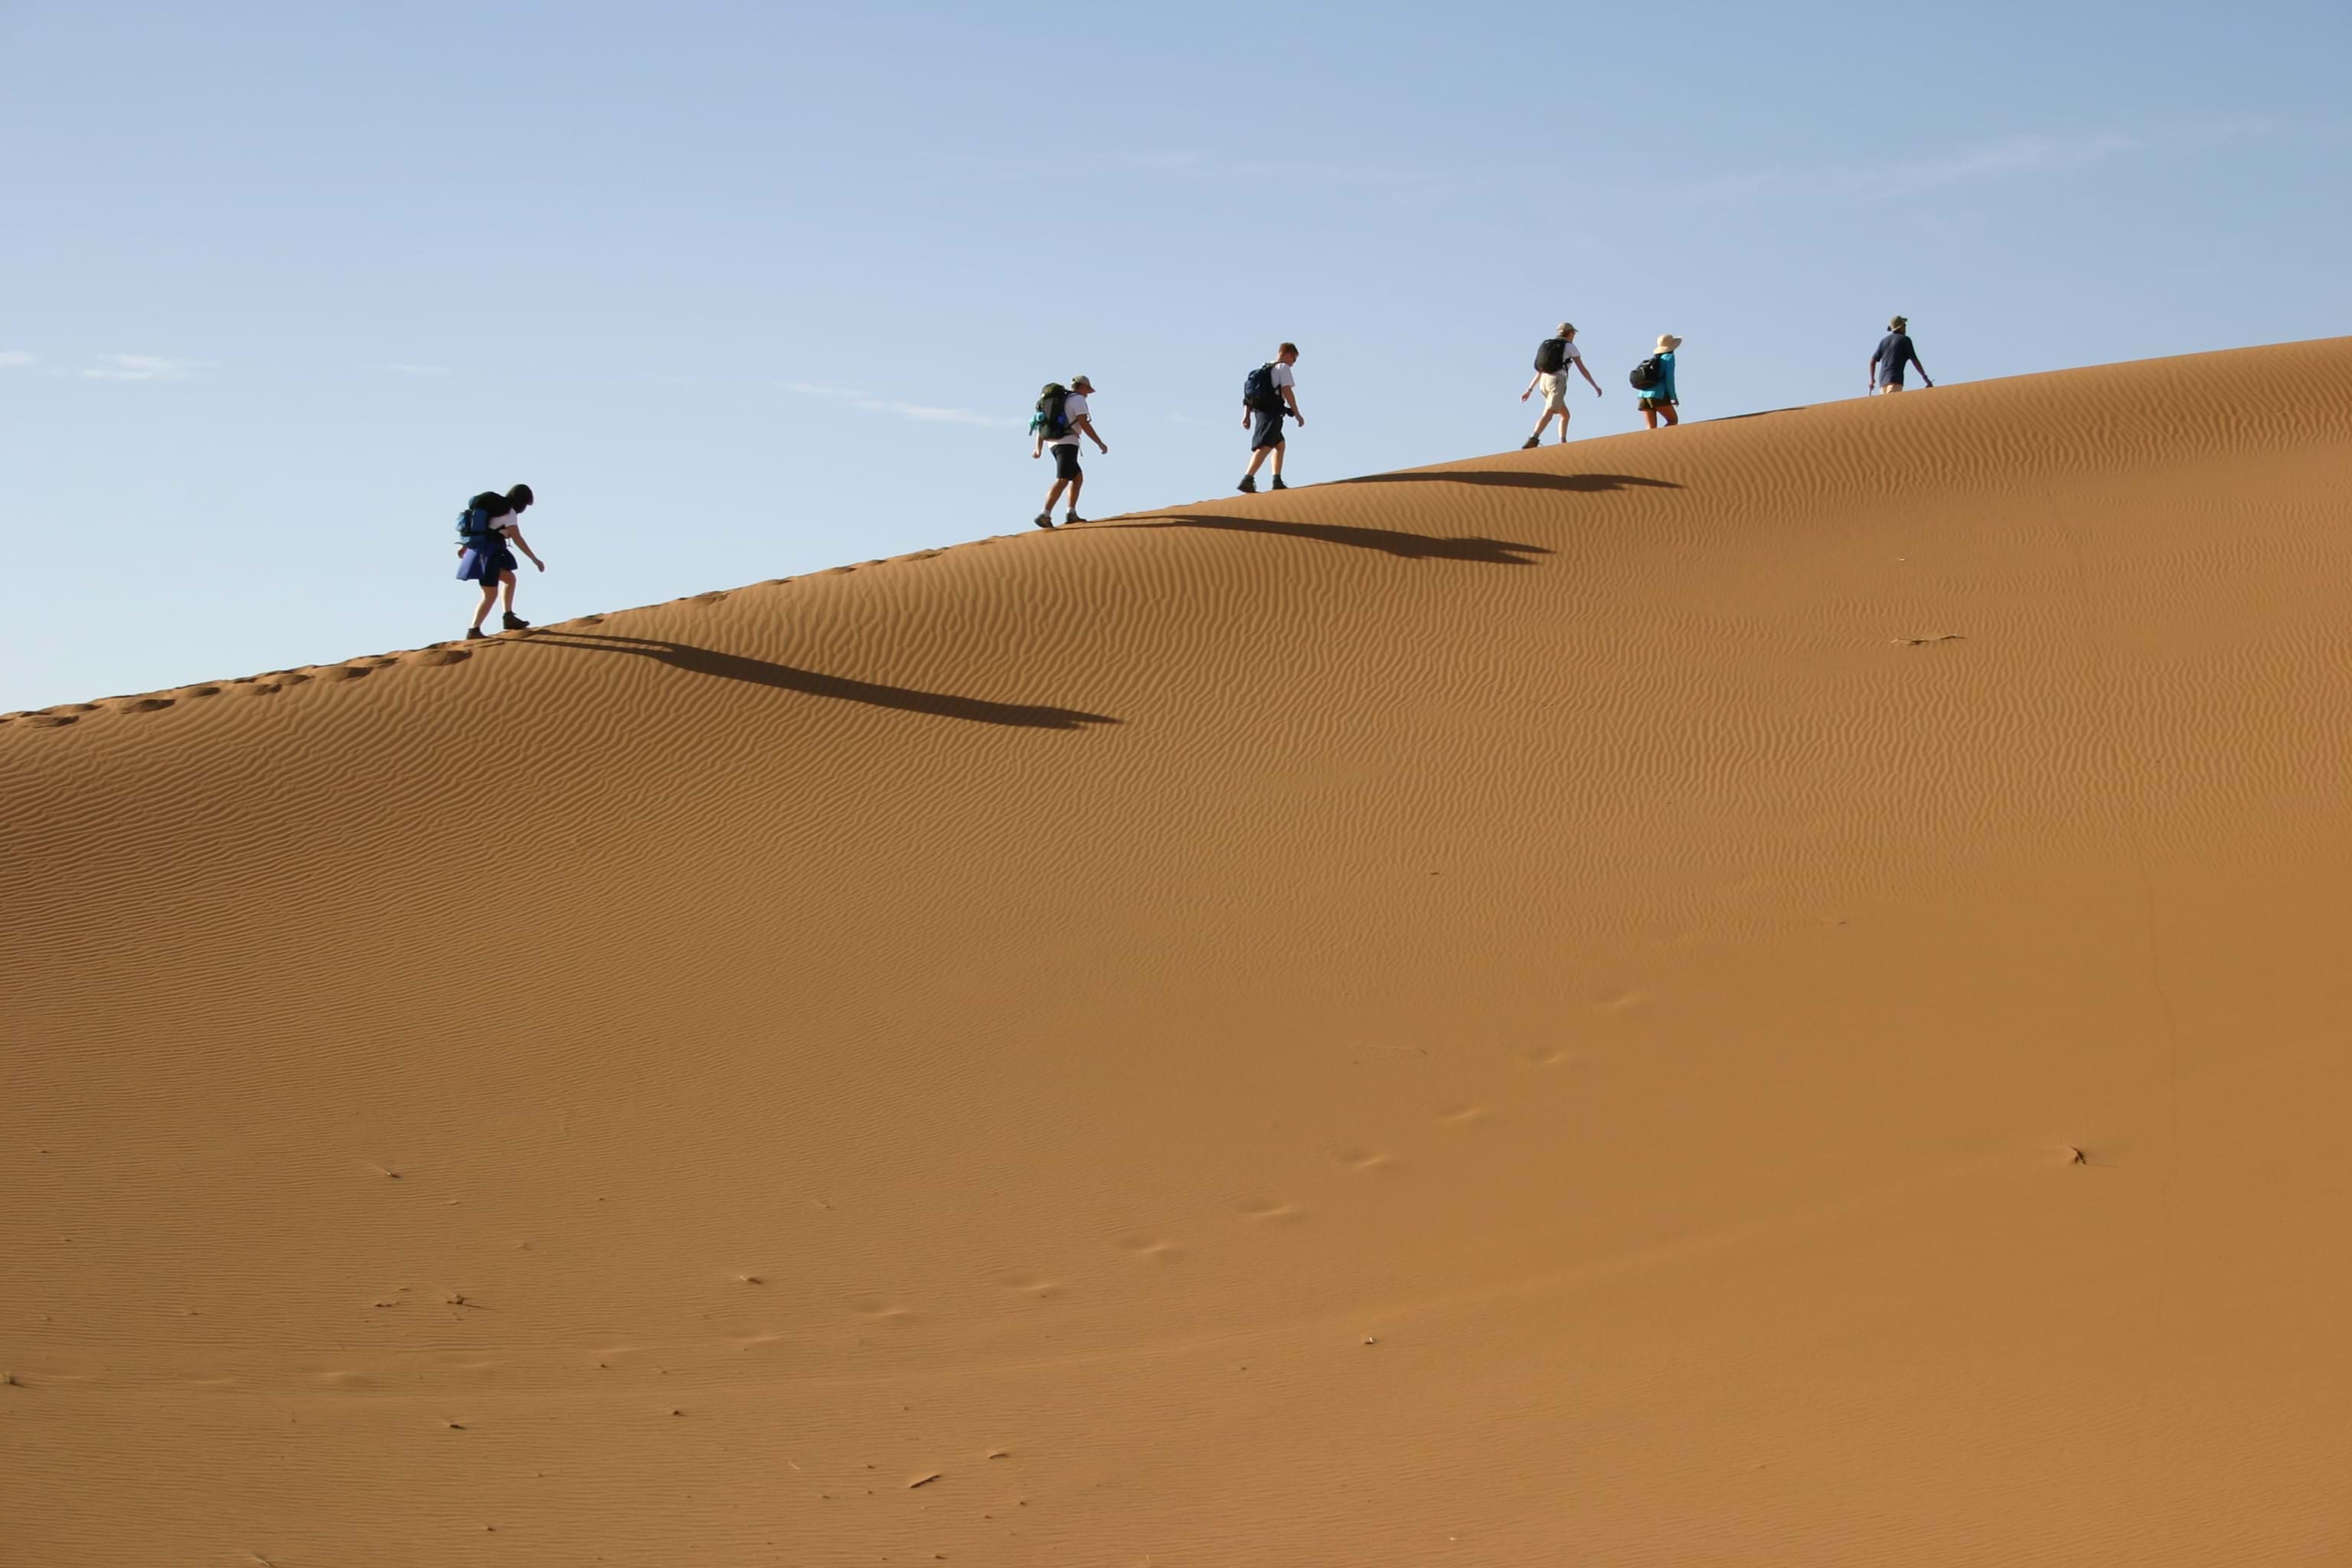 Sand dunes in The Sahara